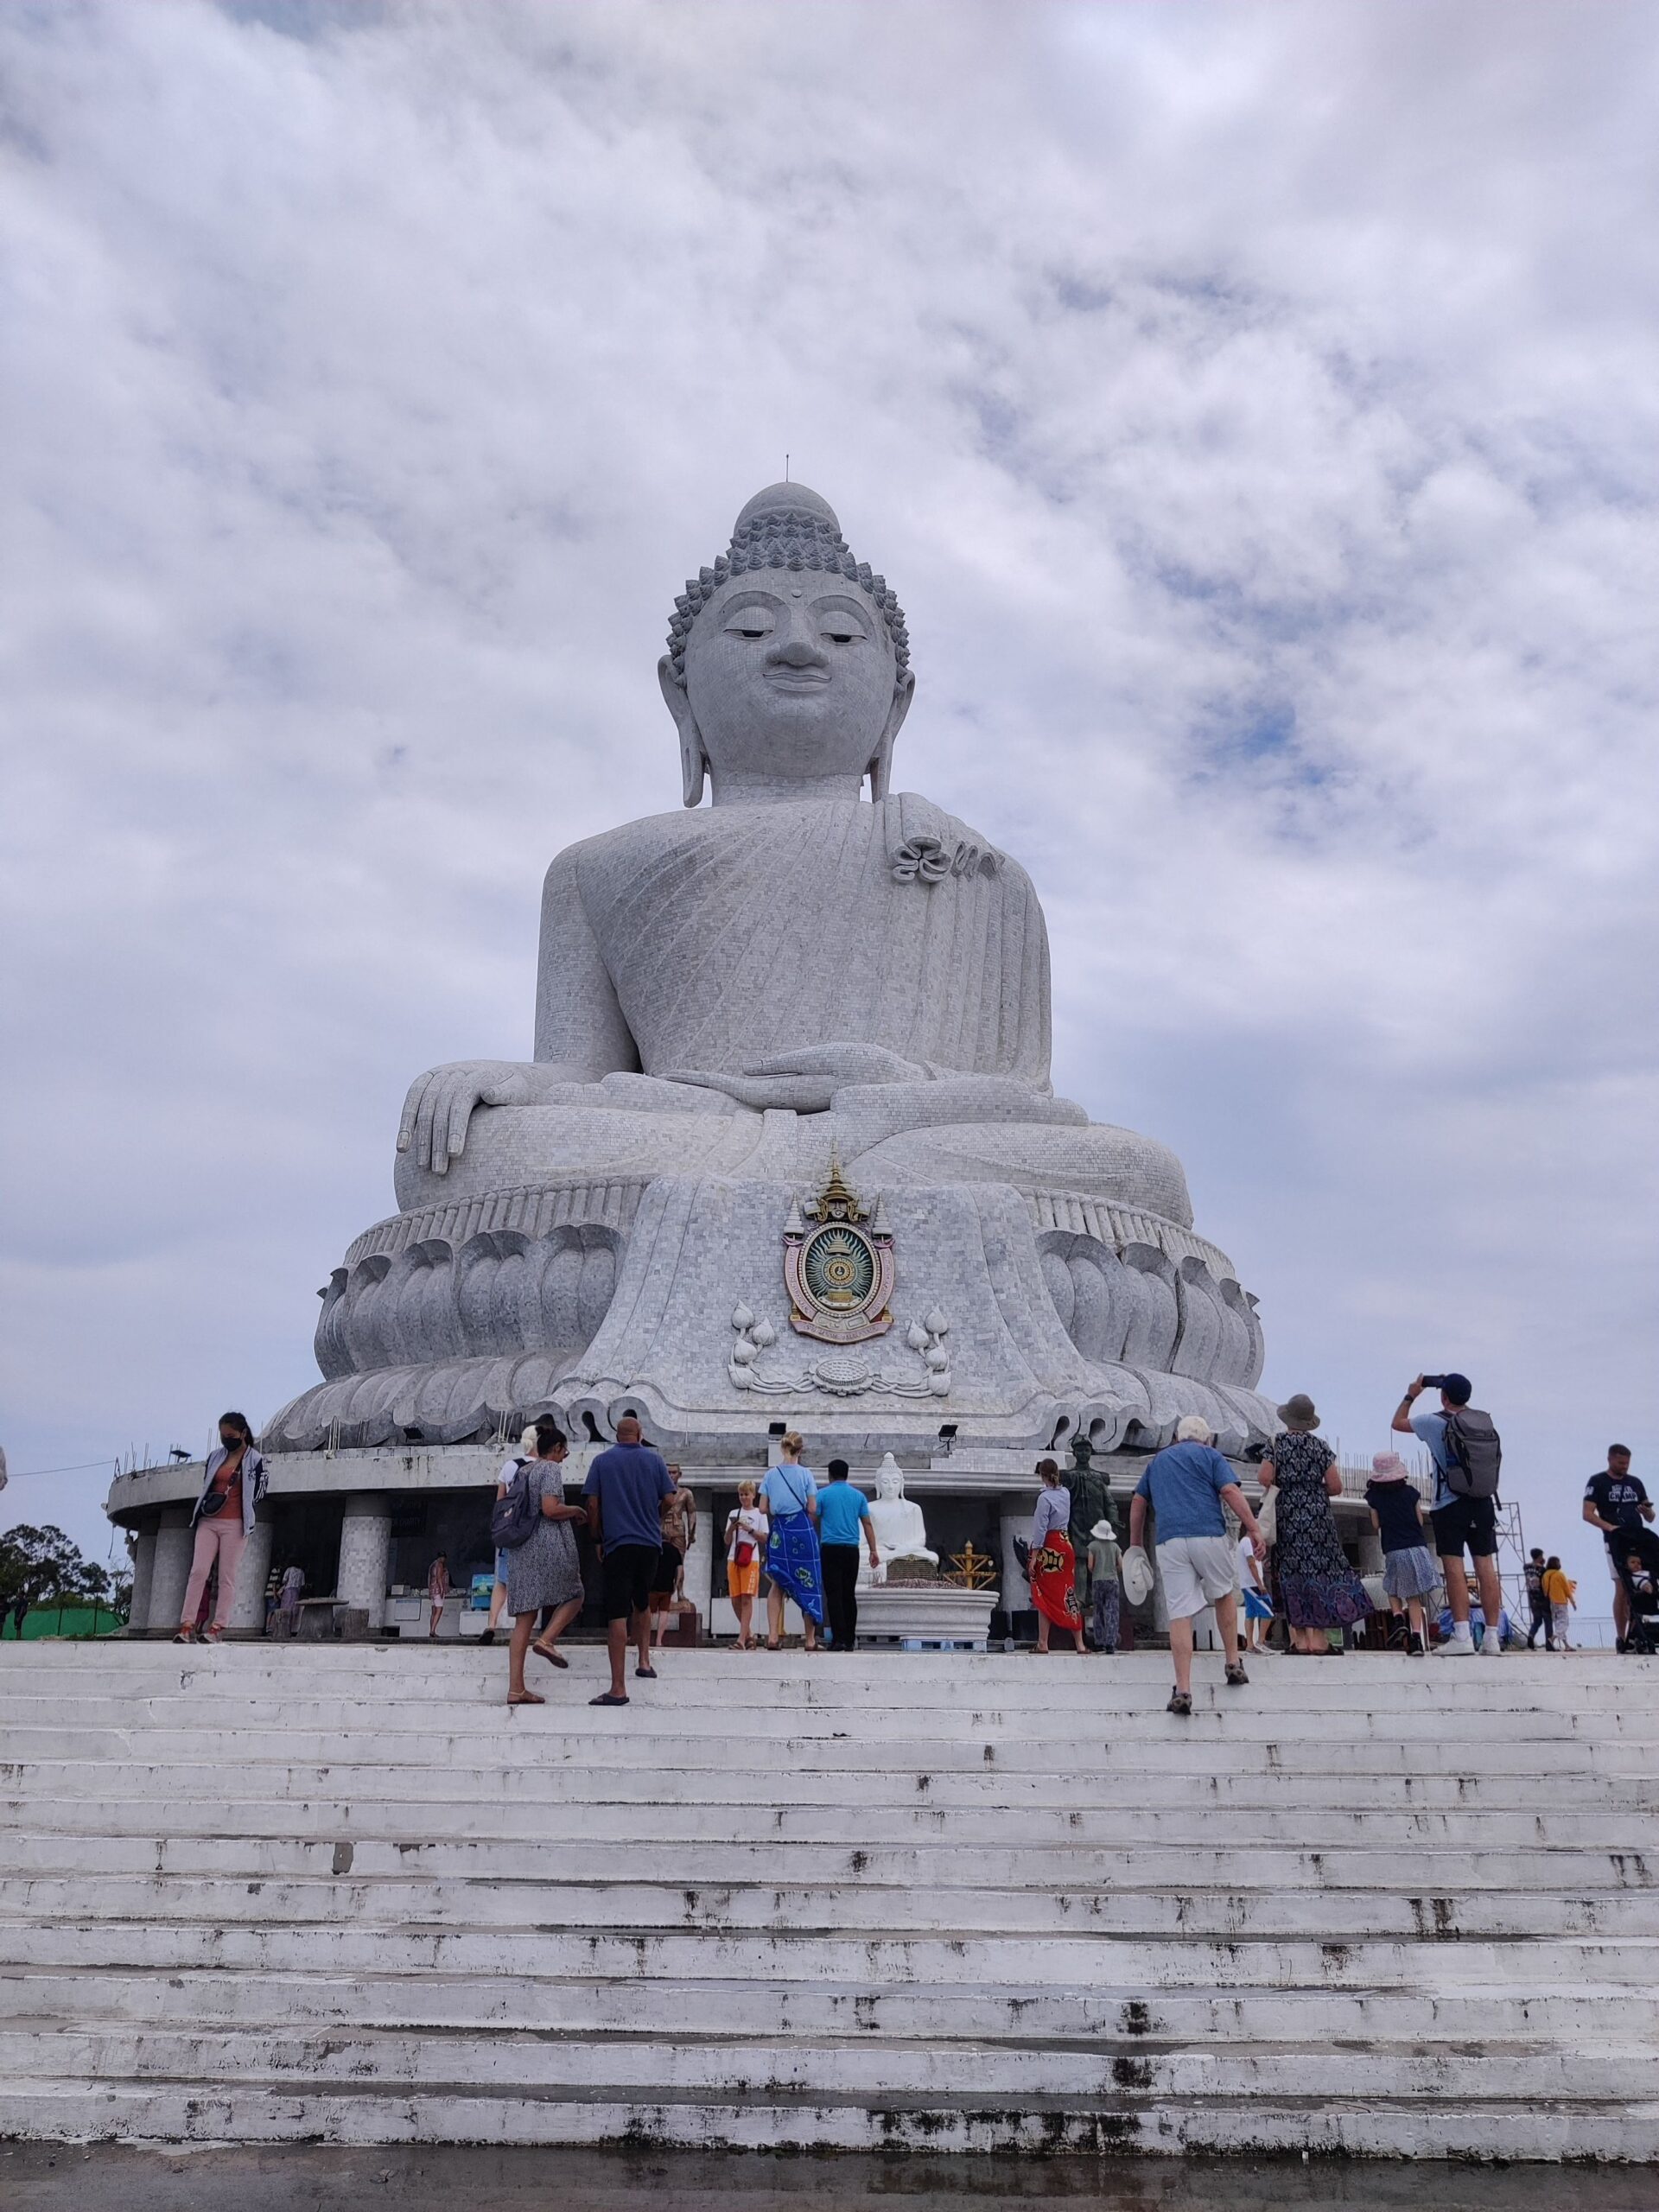 Big Buddha, Phuket